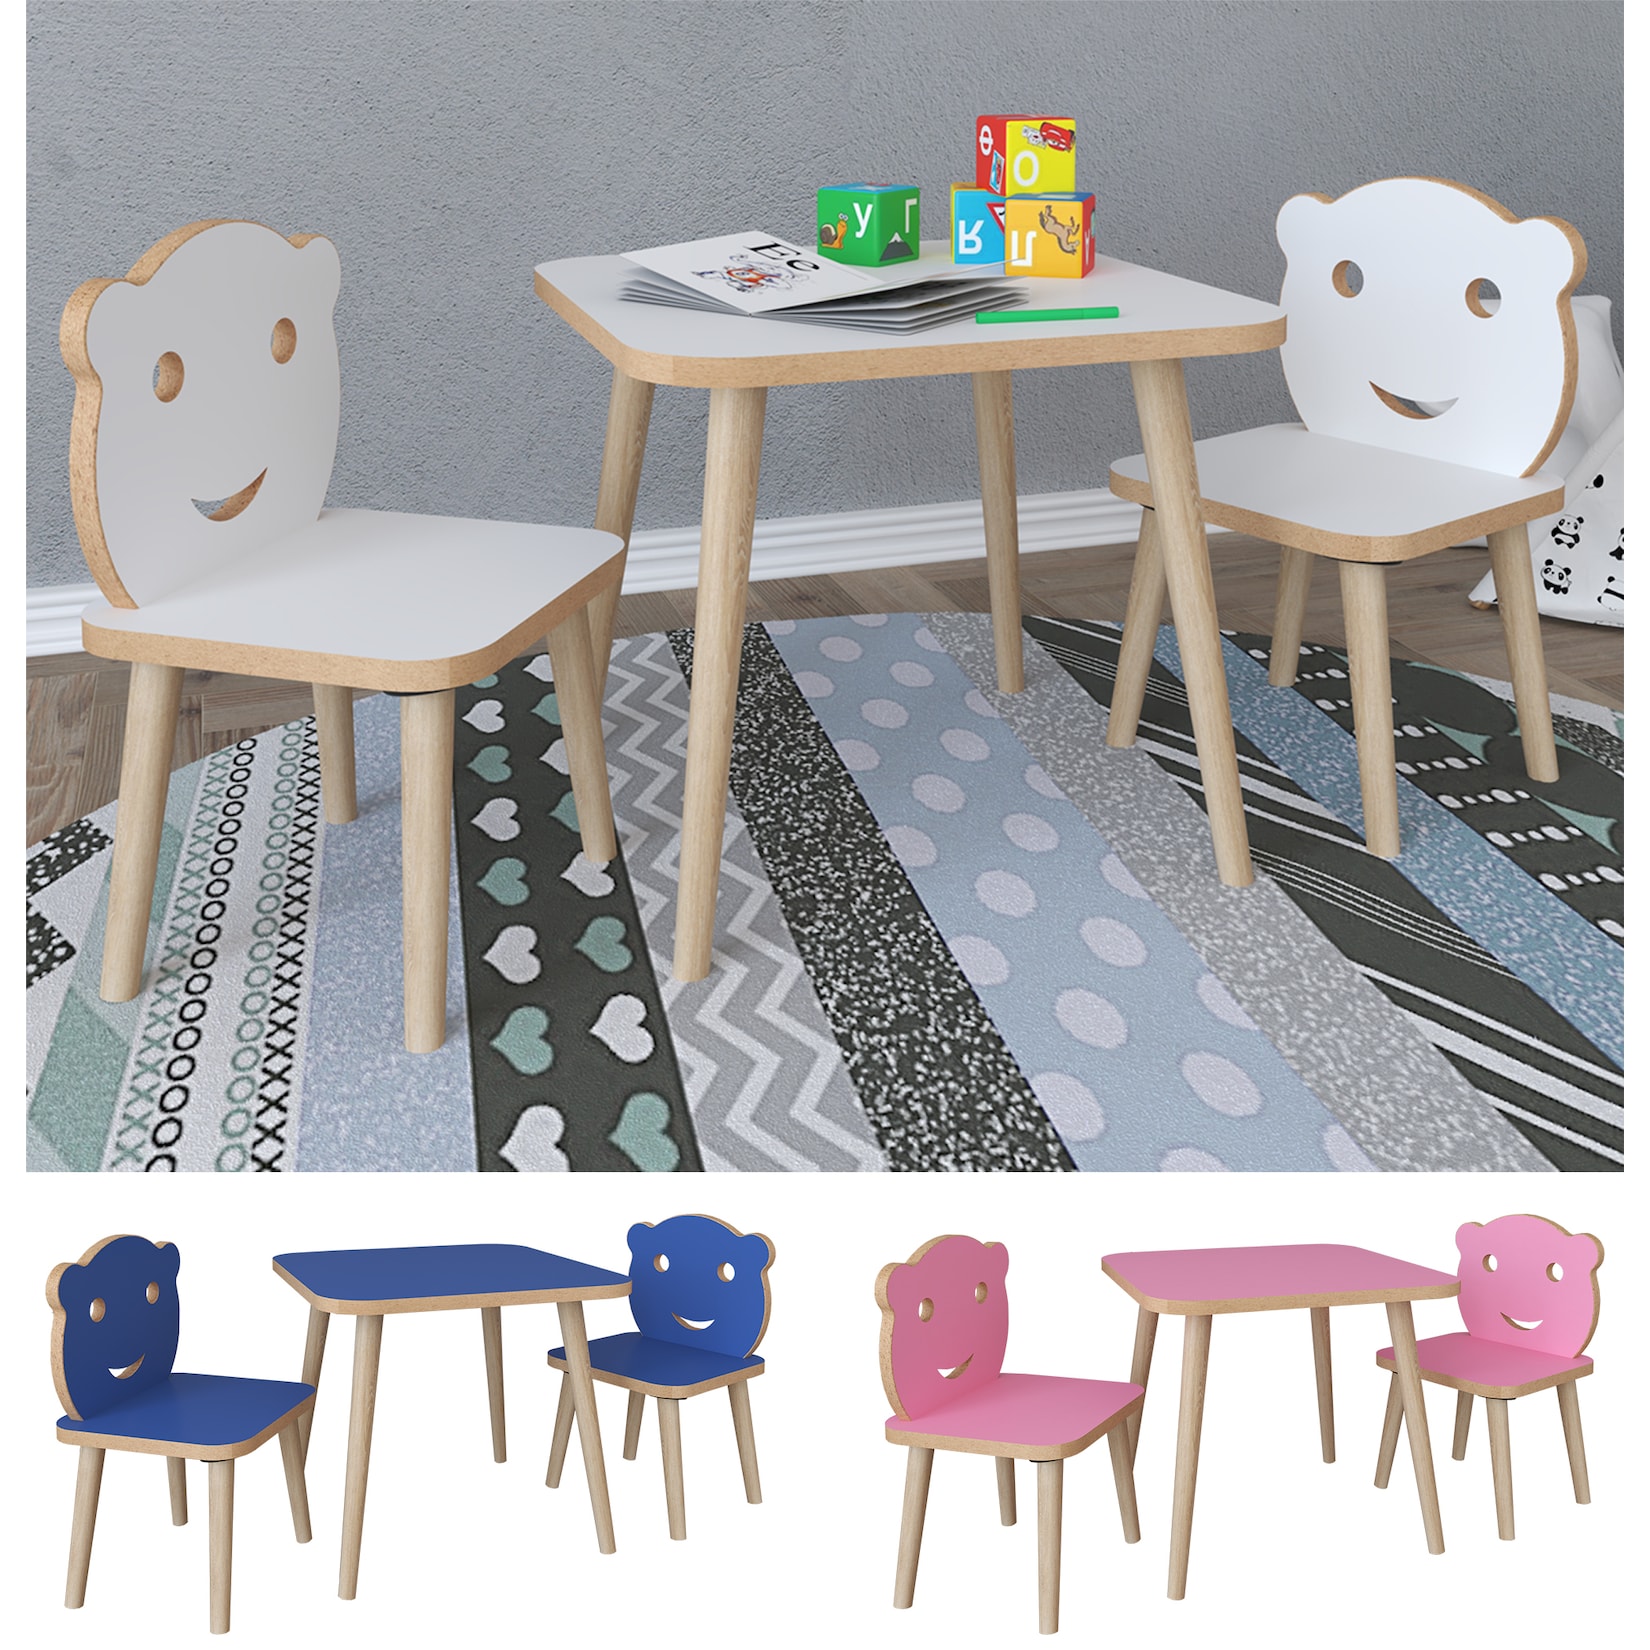 Hioshop LiLuLa babykamer tafel en stoelen wit.